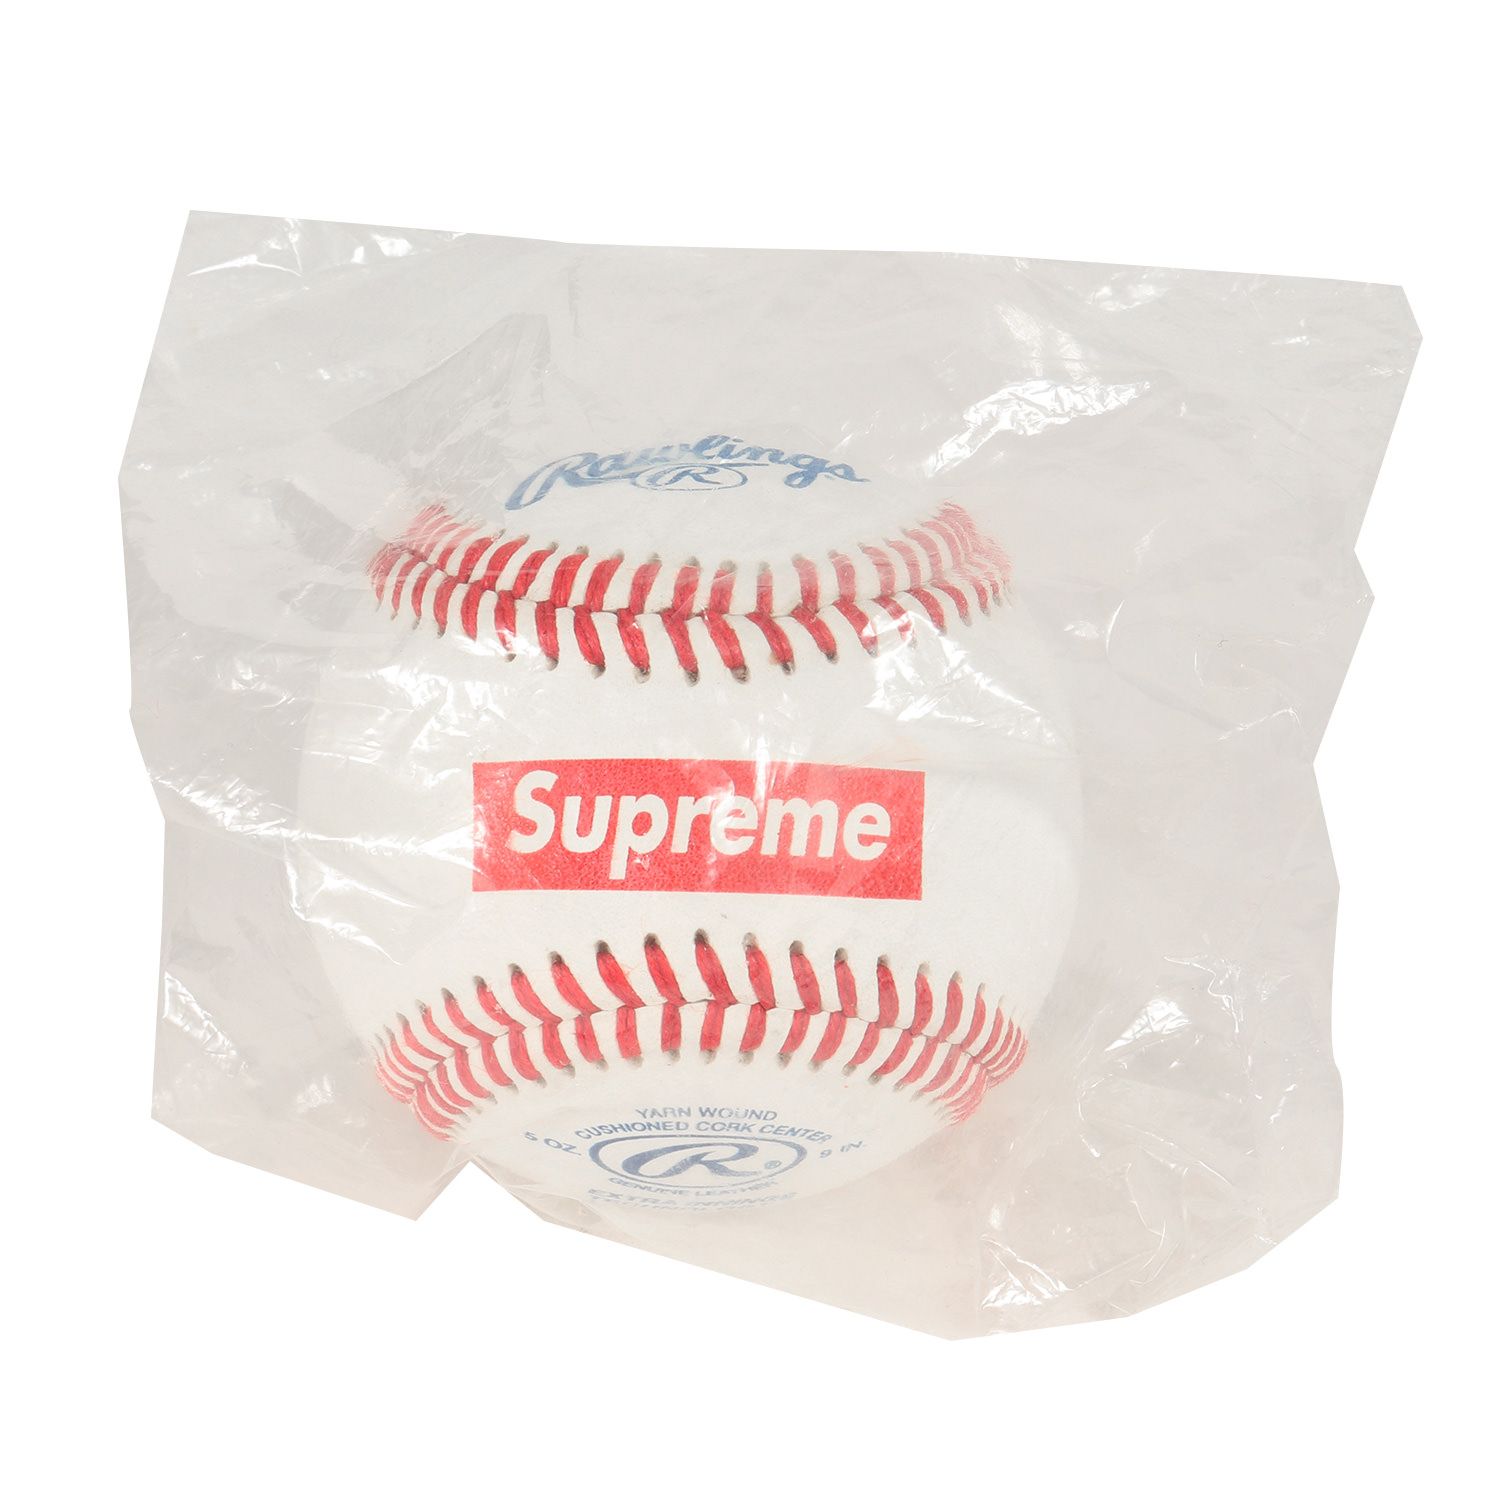 Supreme Rawlings baseball ボール